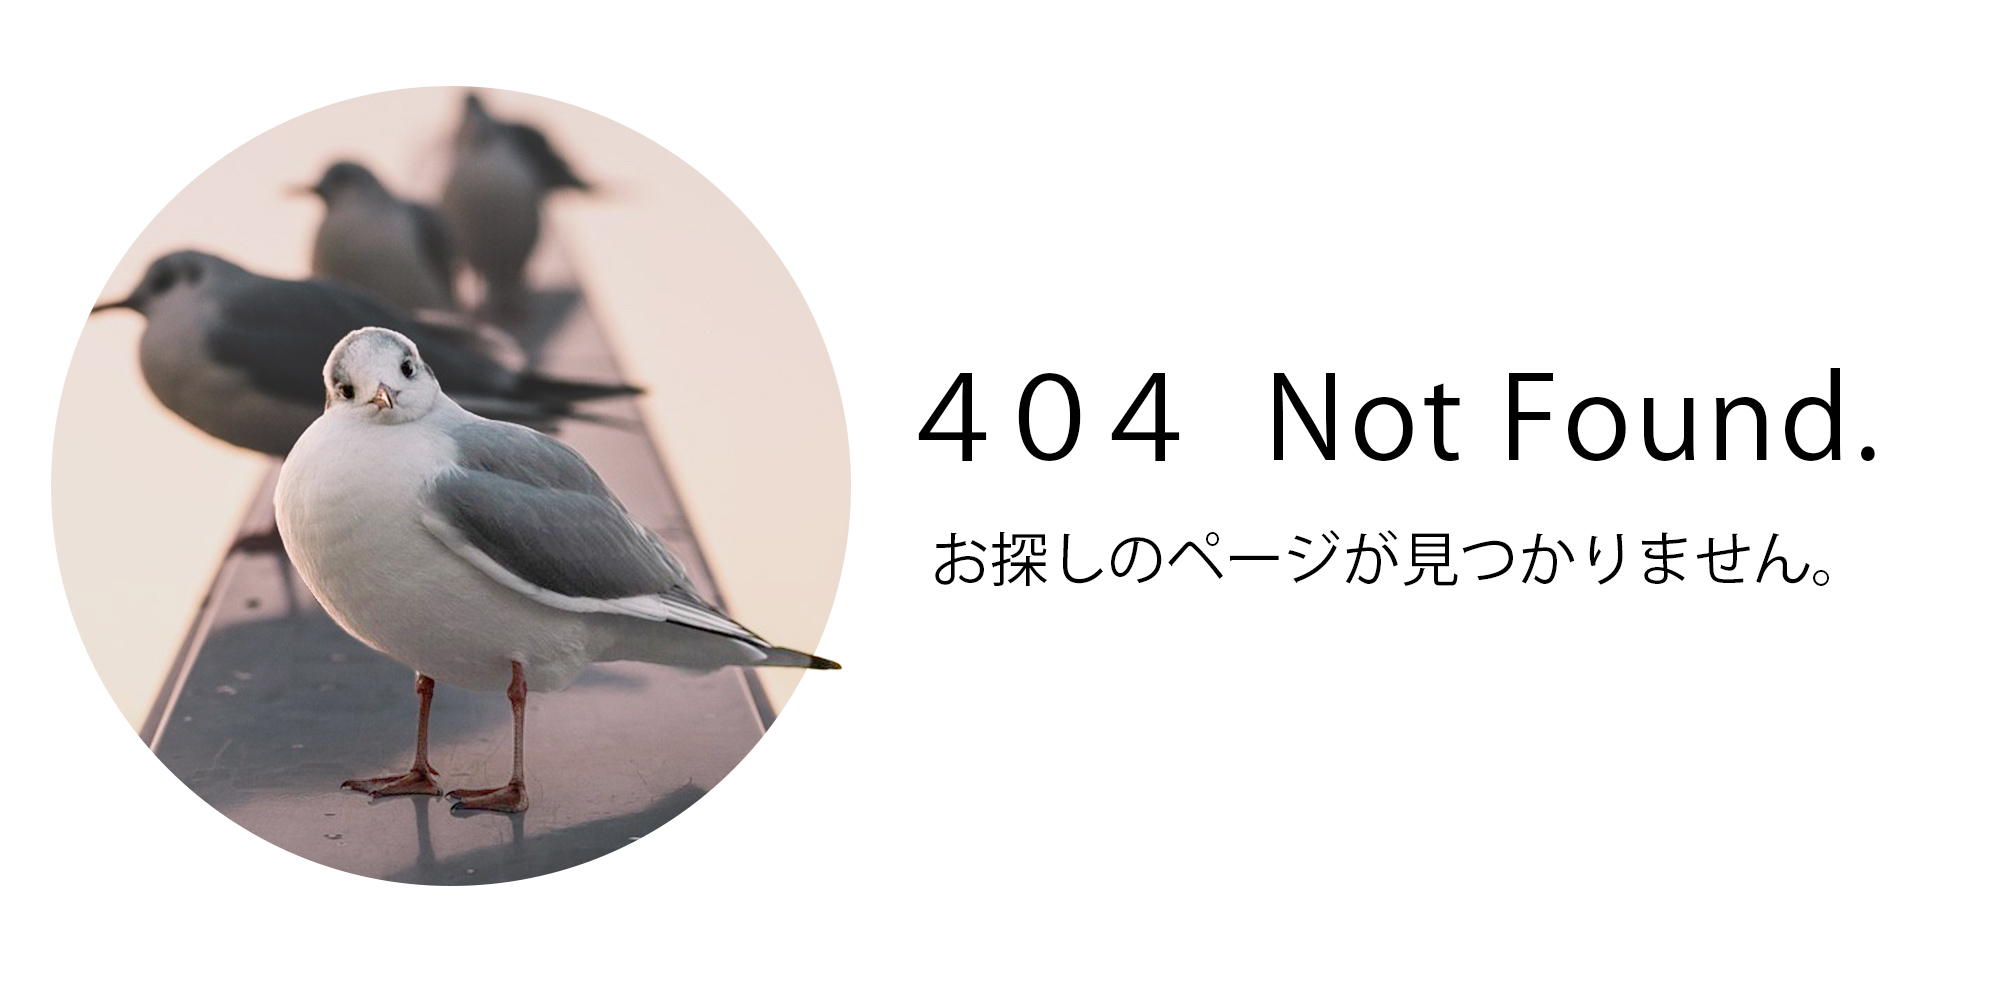 404 Not Found. お探しのページが見つかりません。